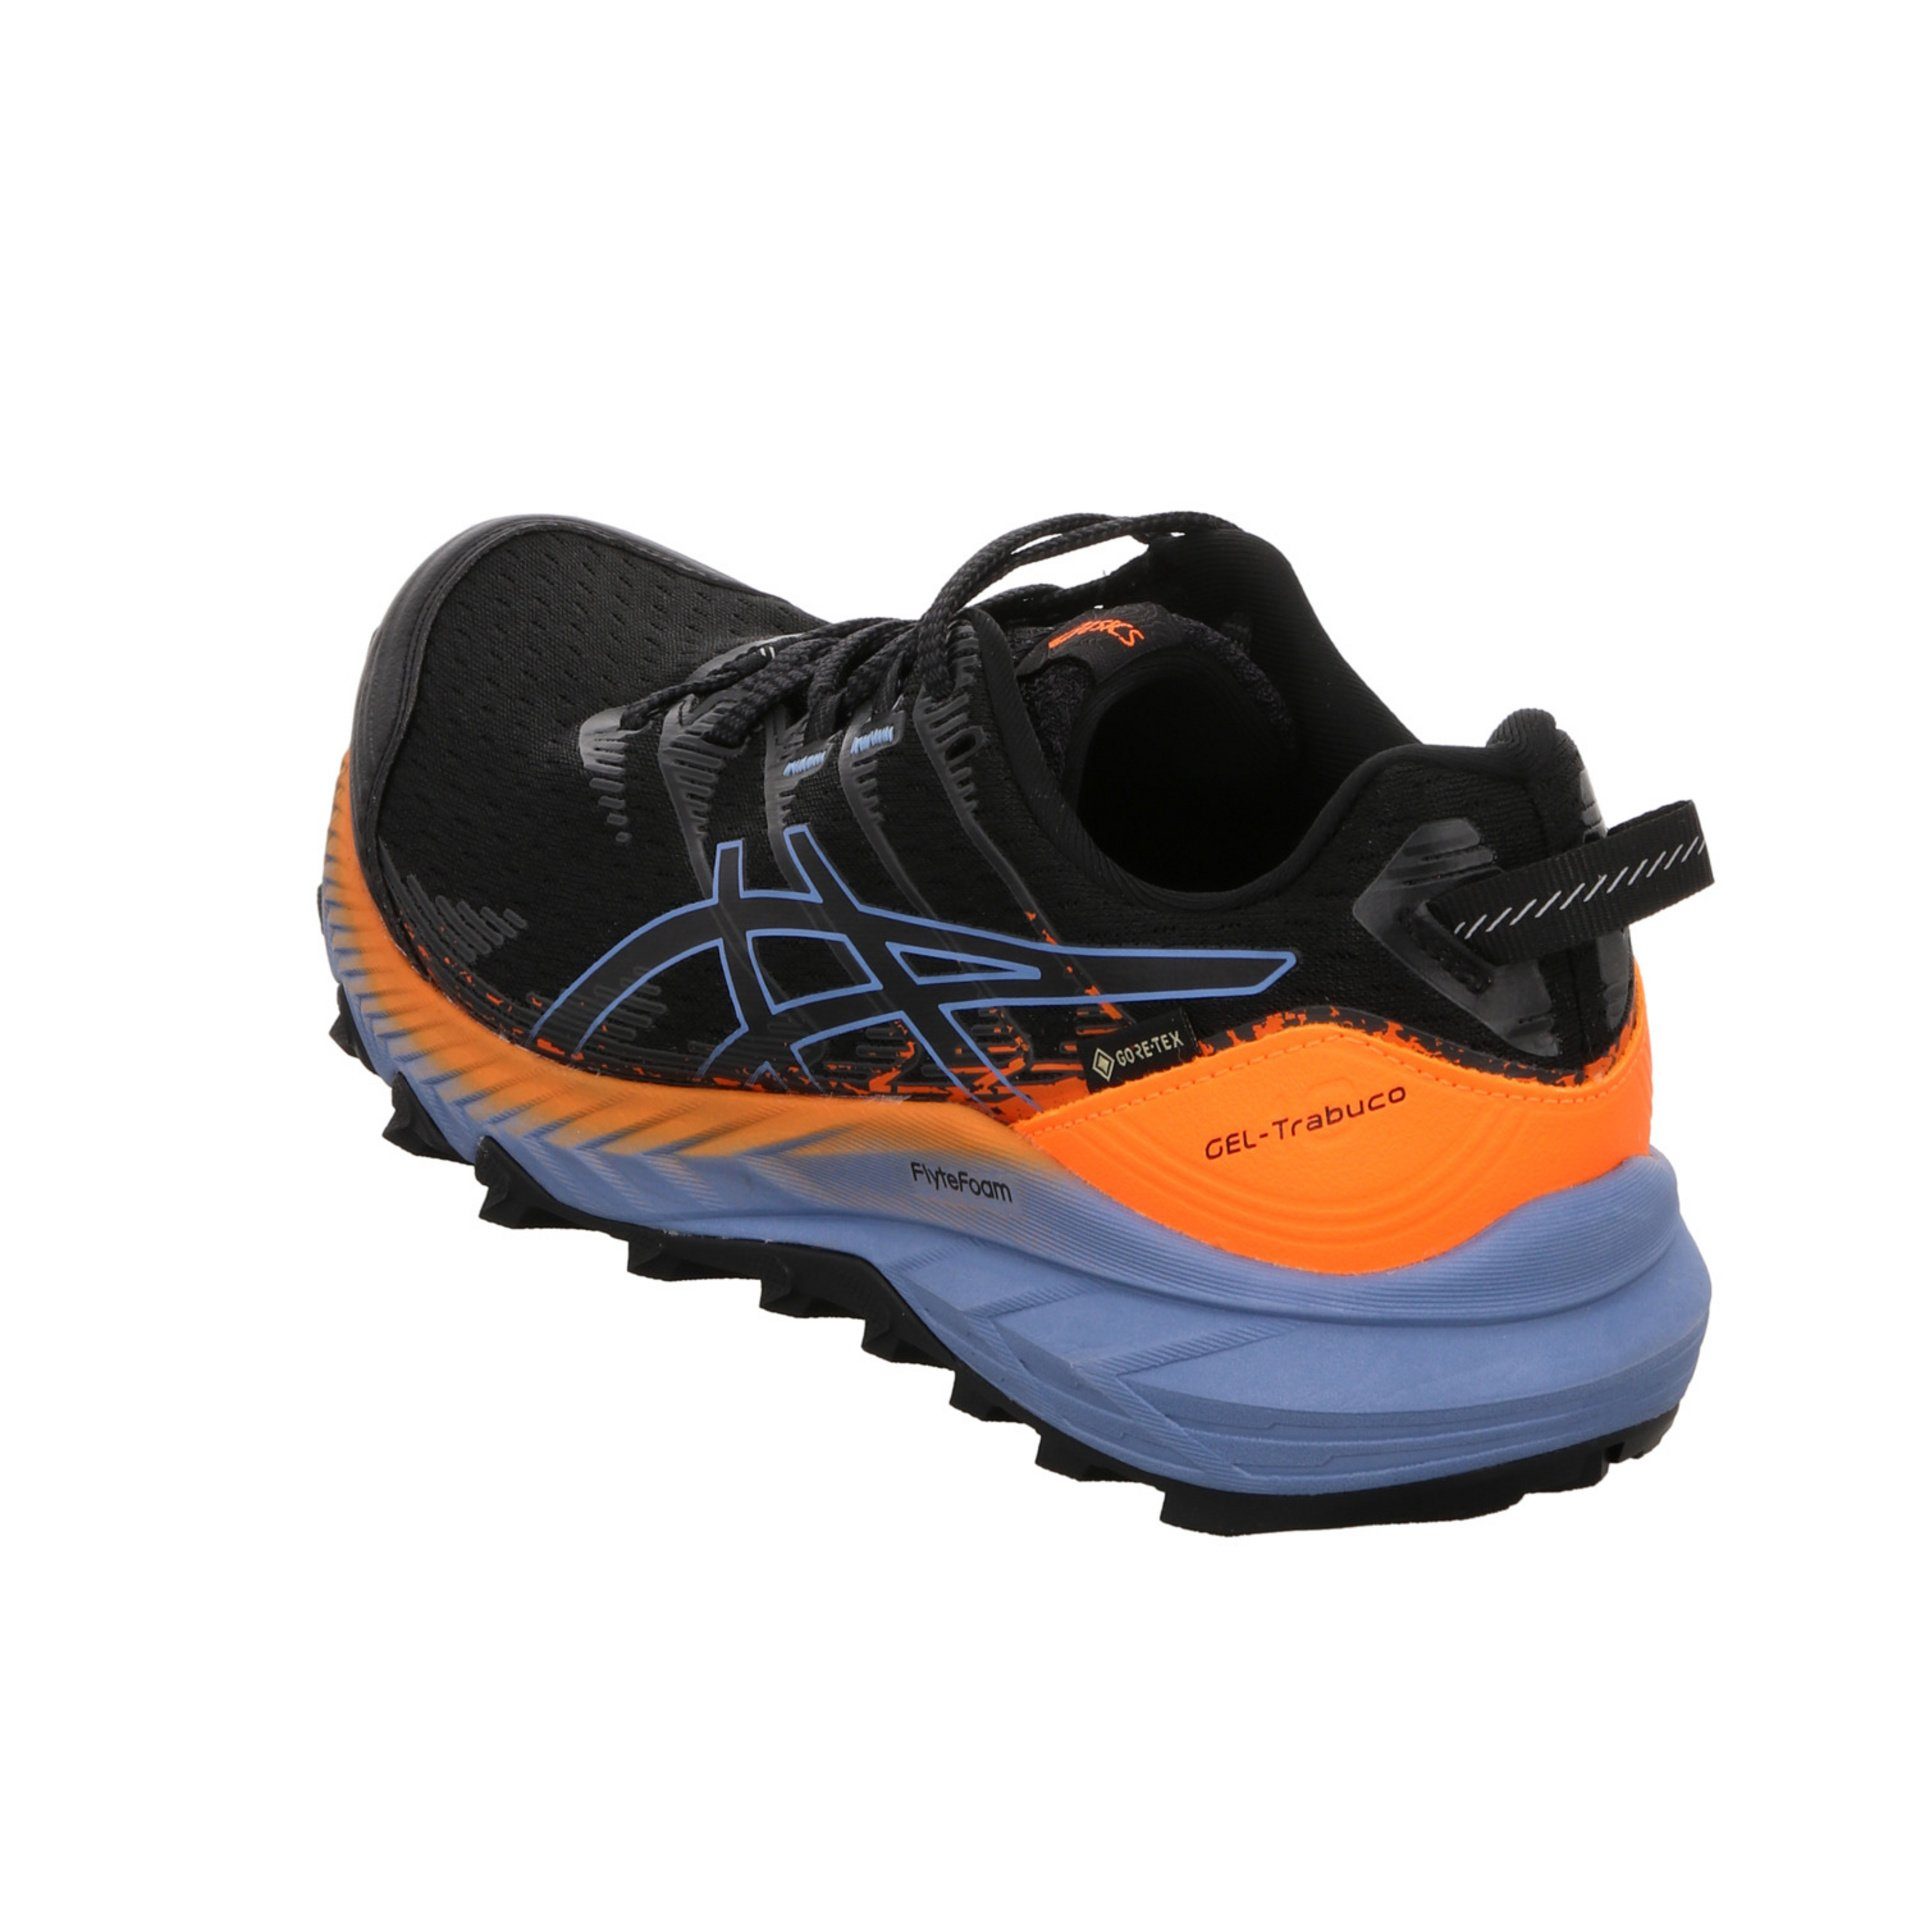 GTX Gel Trailrunner Sneaker schwarz kombi-blau/g Synthetikkombination 10 Trabuco Asics